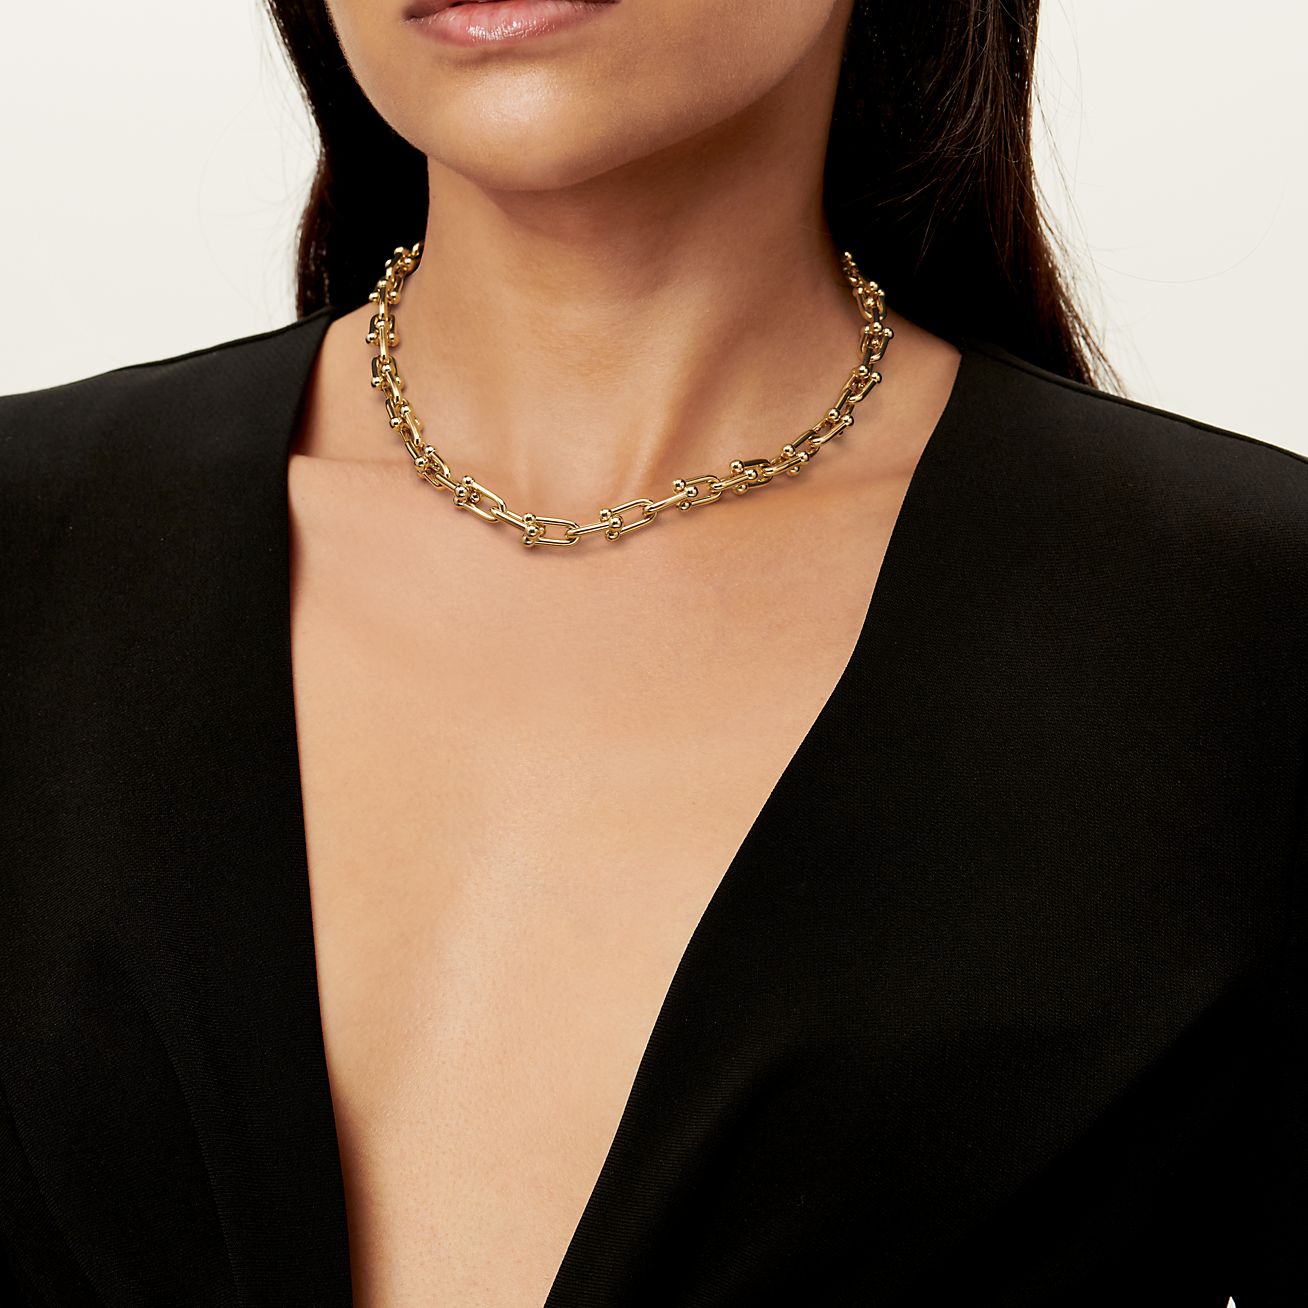 Dystopian necklace for men. Hardware necklace. Mechanical pendant on chain  - Shop Cyberpunk Jewelry Boutique Necklaces - Pinkoi